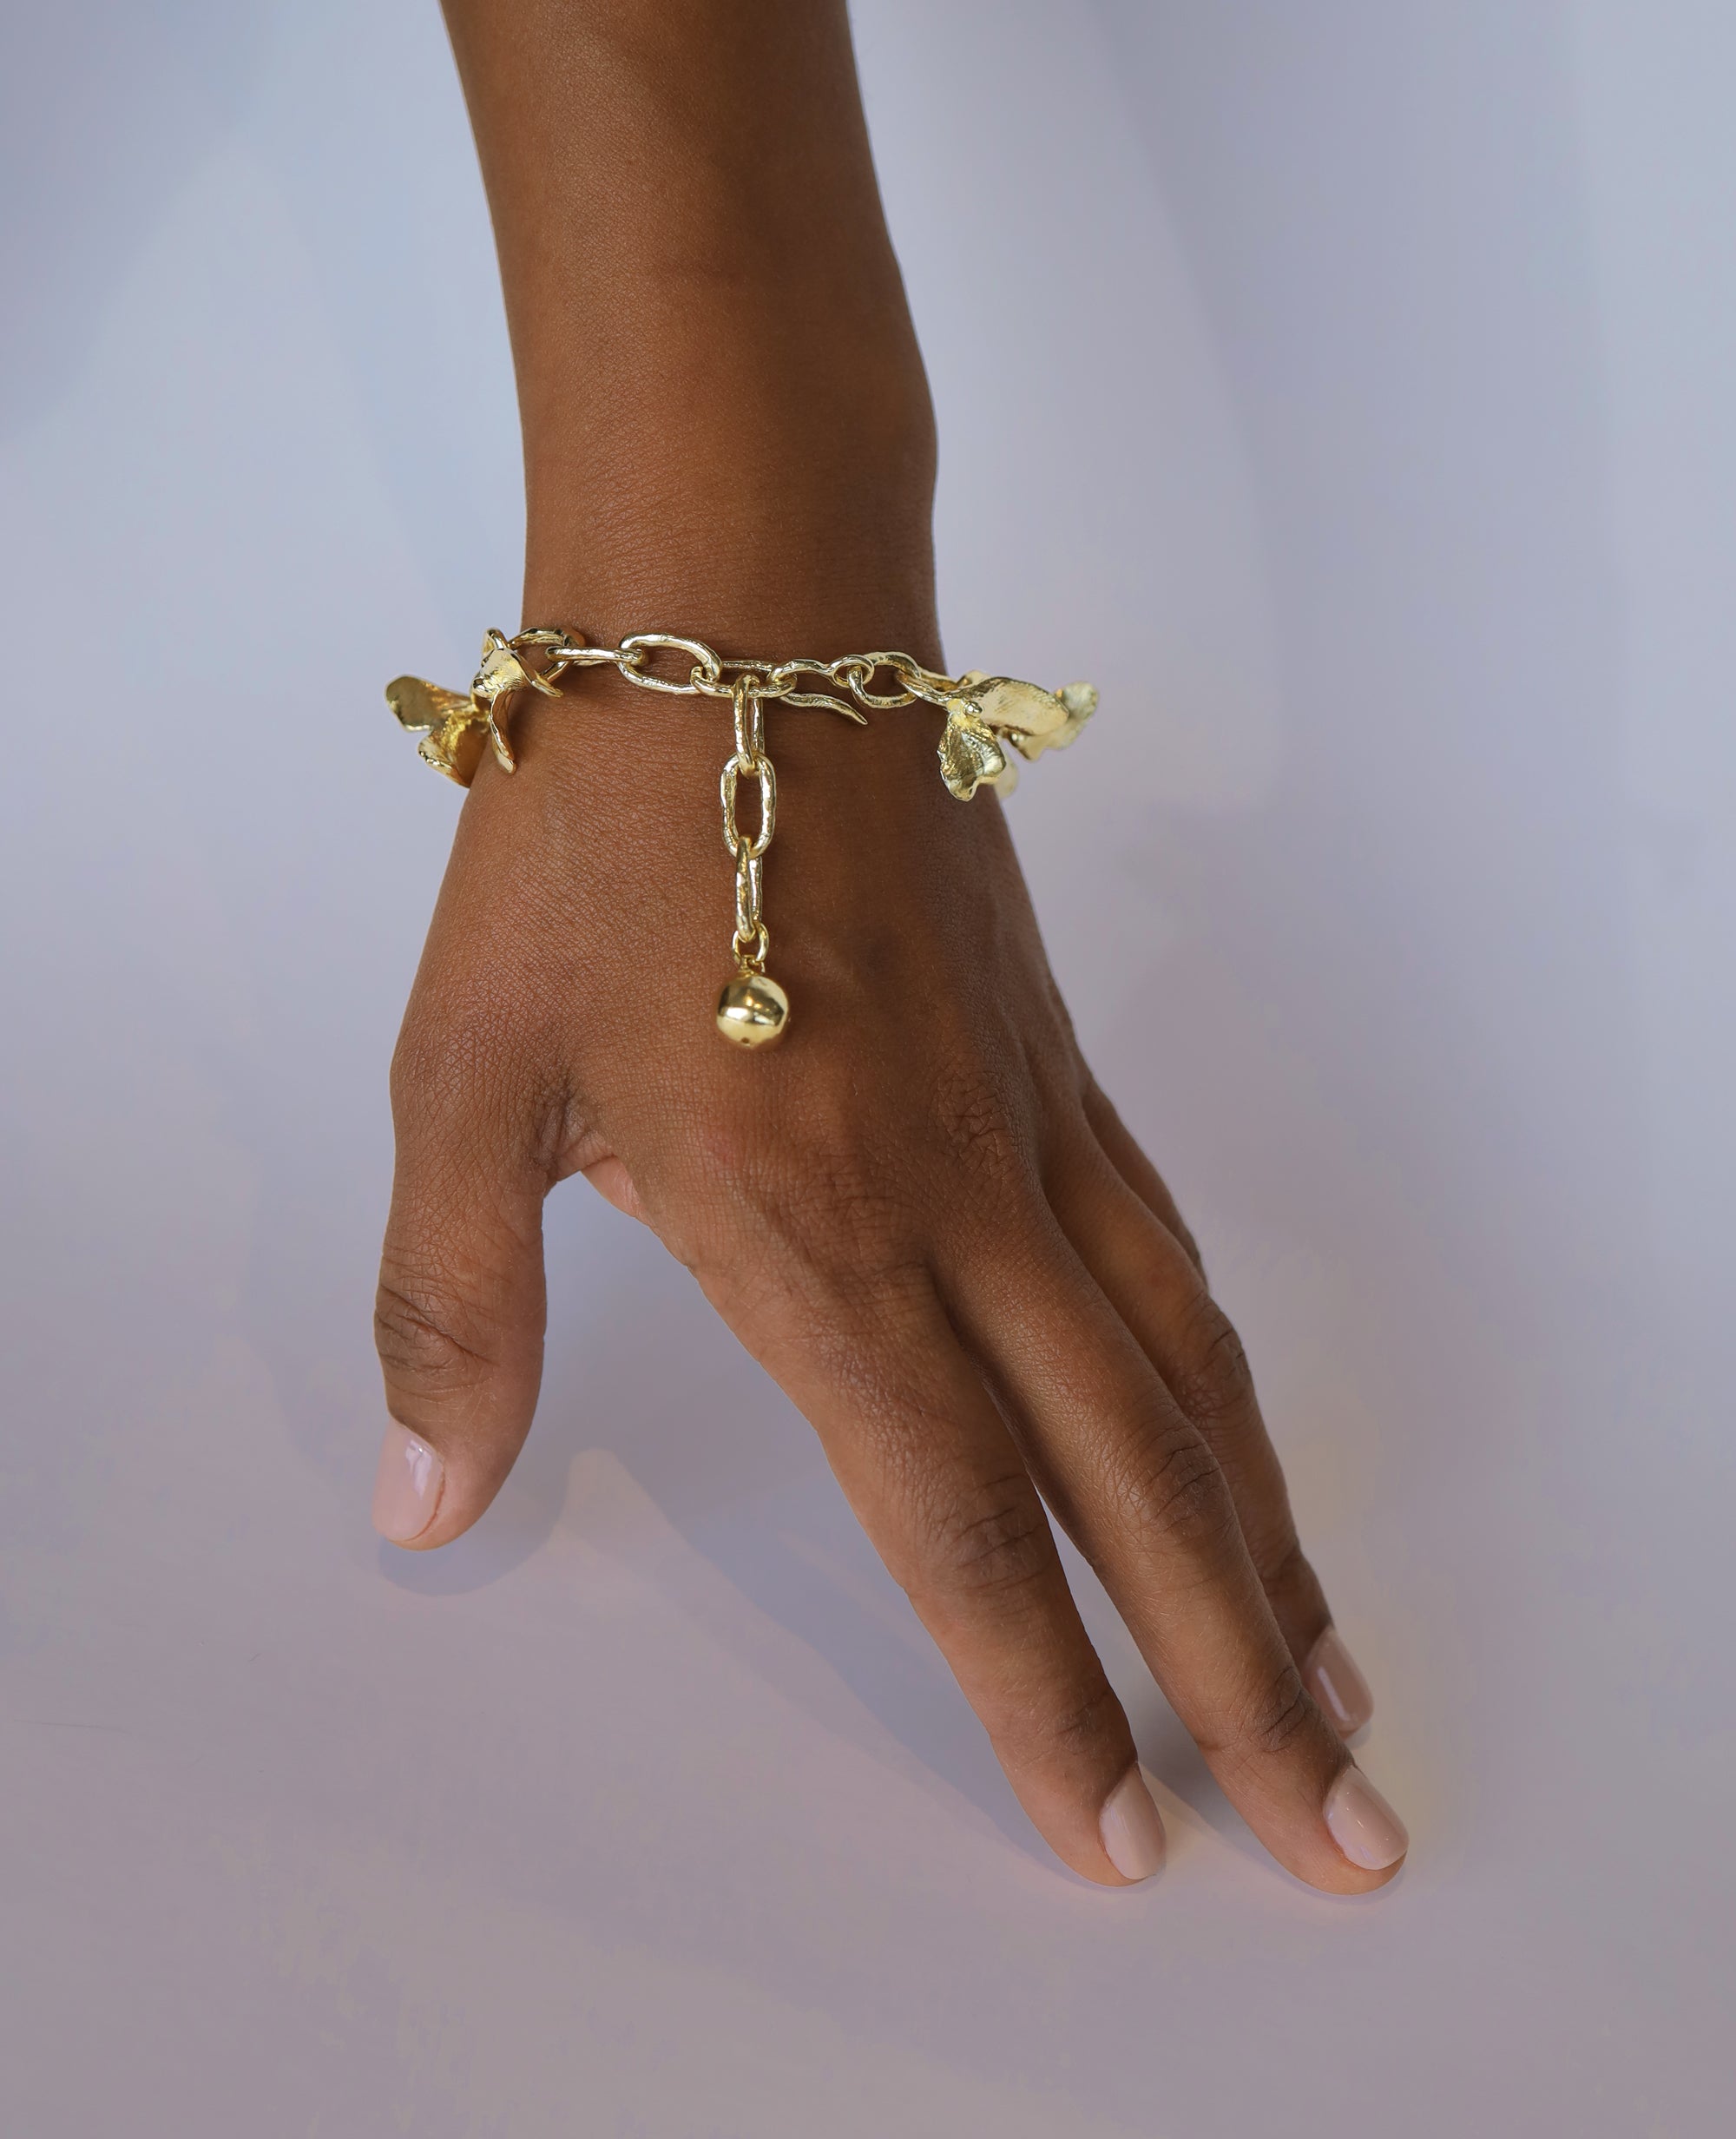 FLORALIS ARMLET // golden bracelet - ORA-C jewelry - handmade jewelry by Montreal based independent designer Caroline Pham